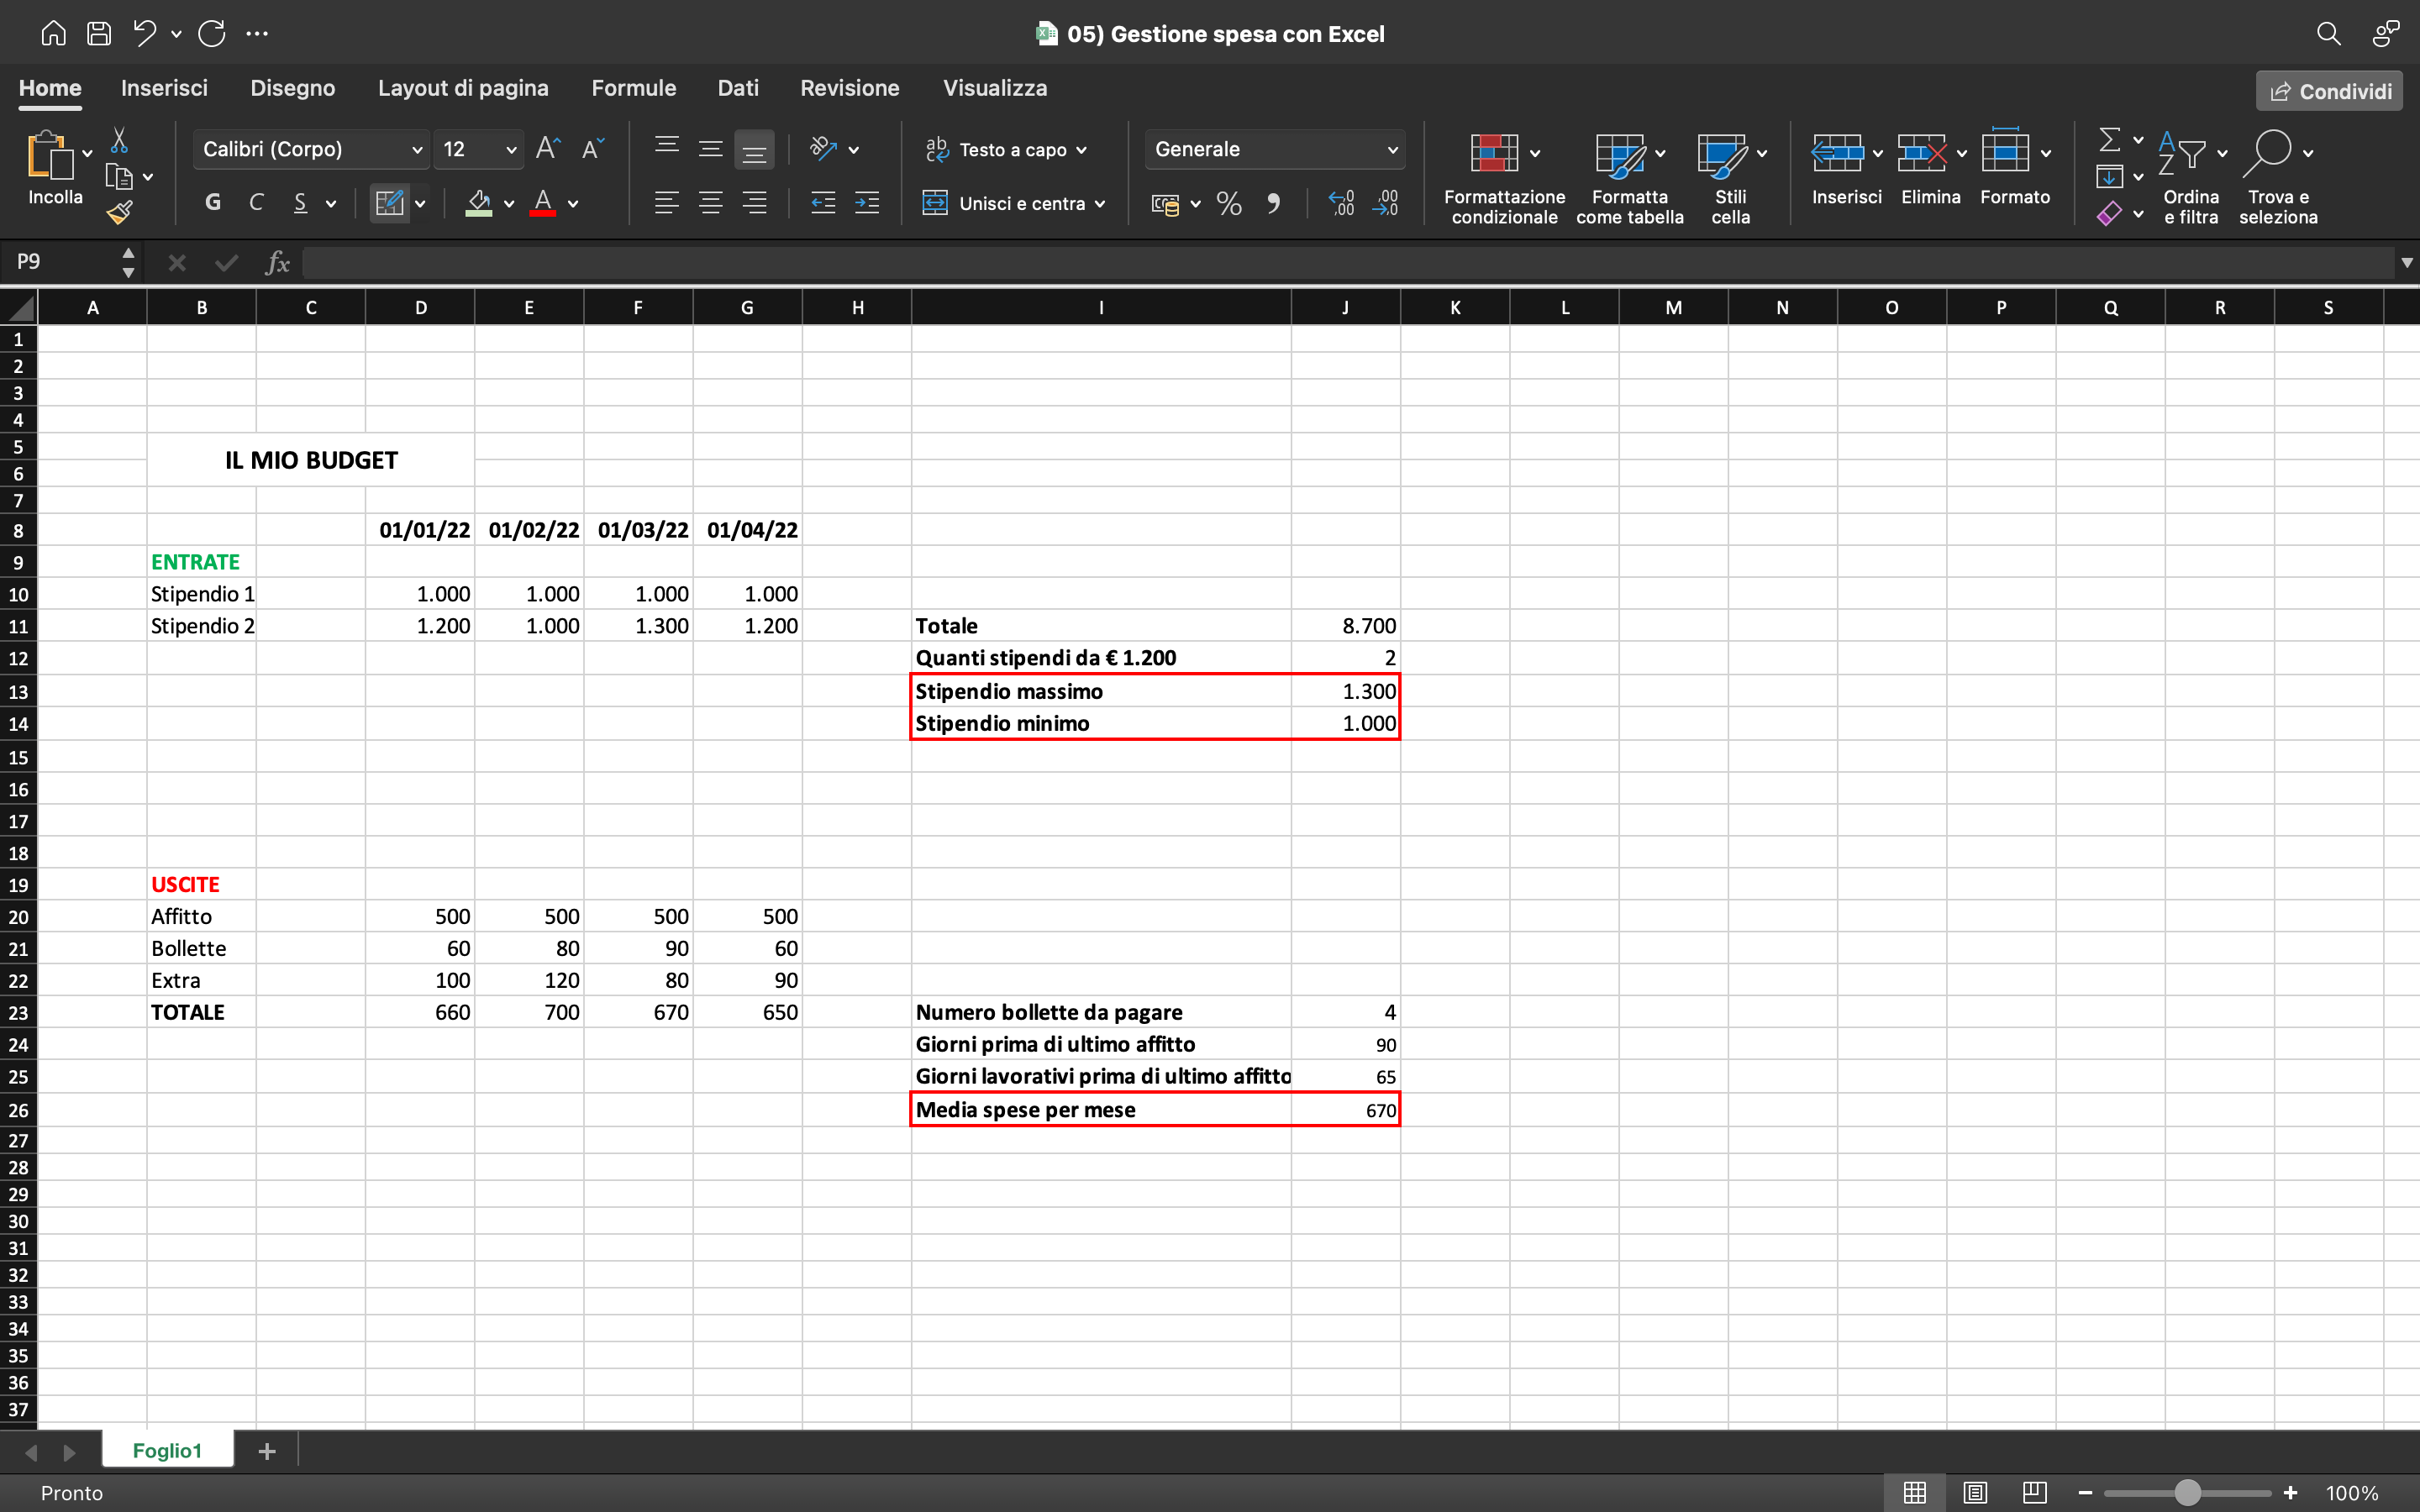 Gestione spese in Excel: funzioni “MEDIA”, “MIN” e “MAX”